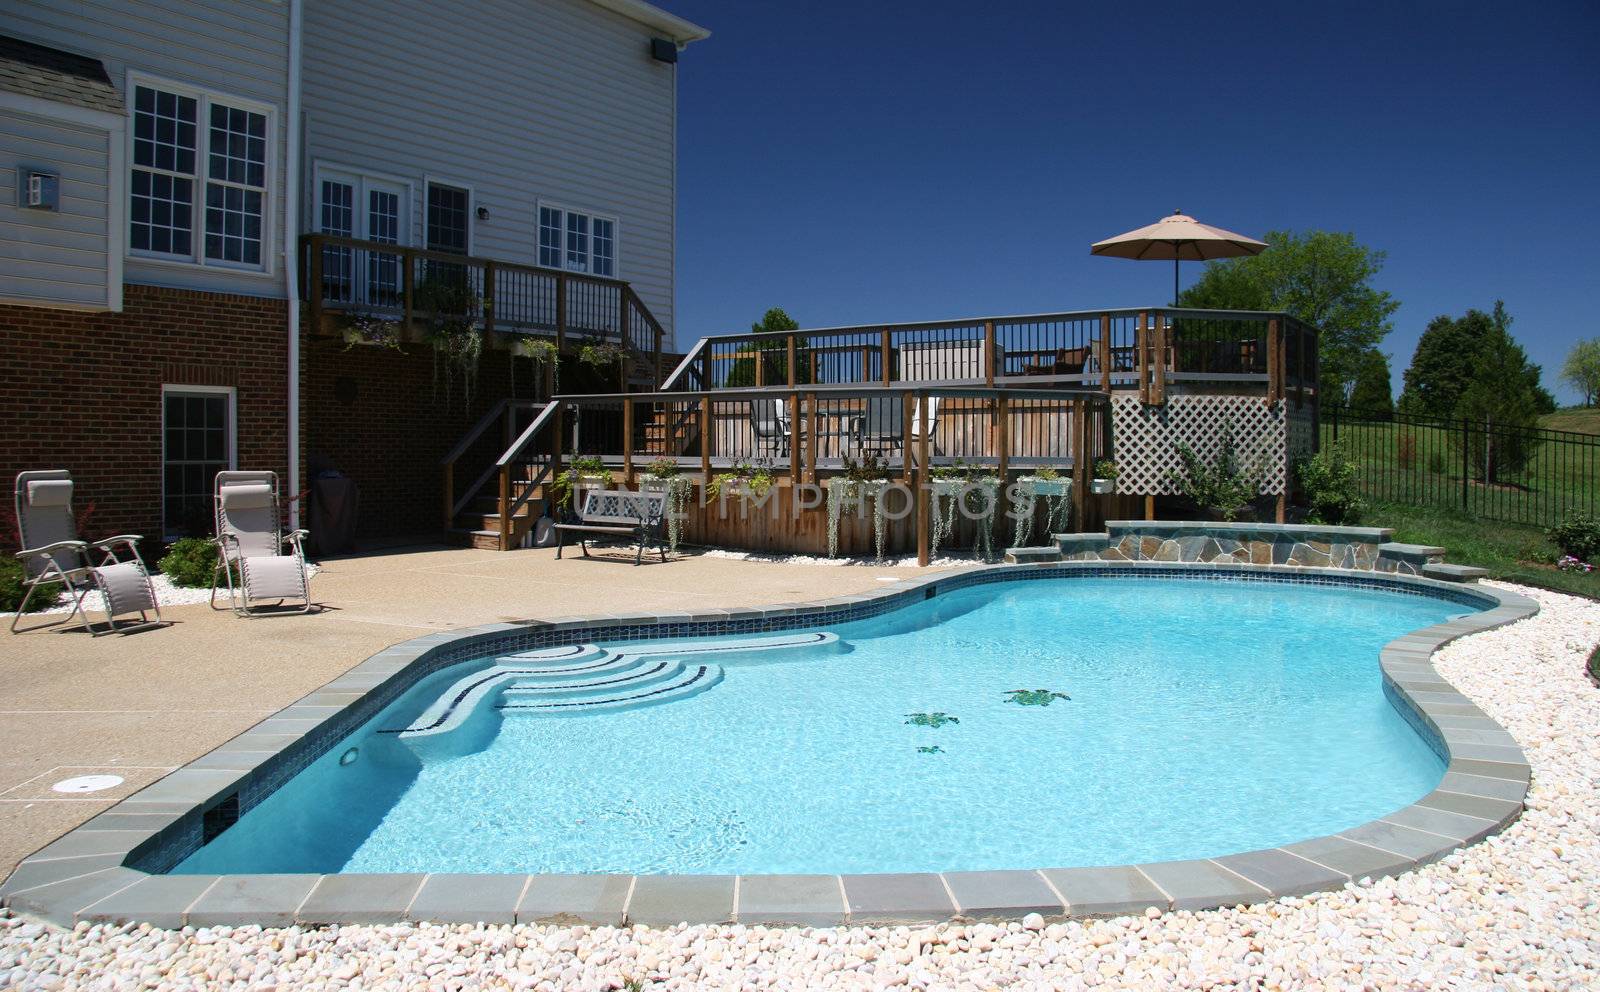 Backyard pool in rear of modern house in suburbs